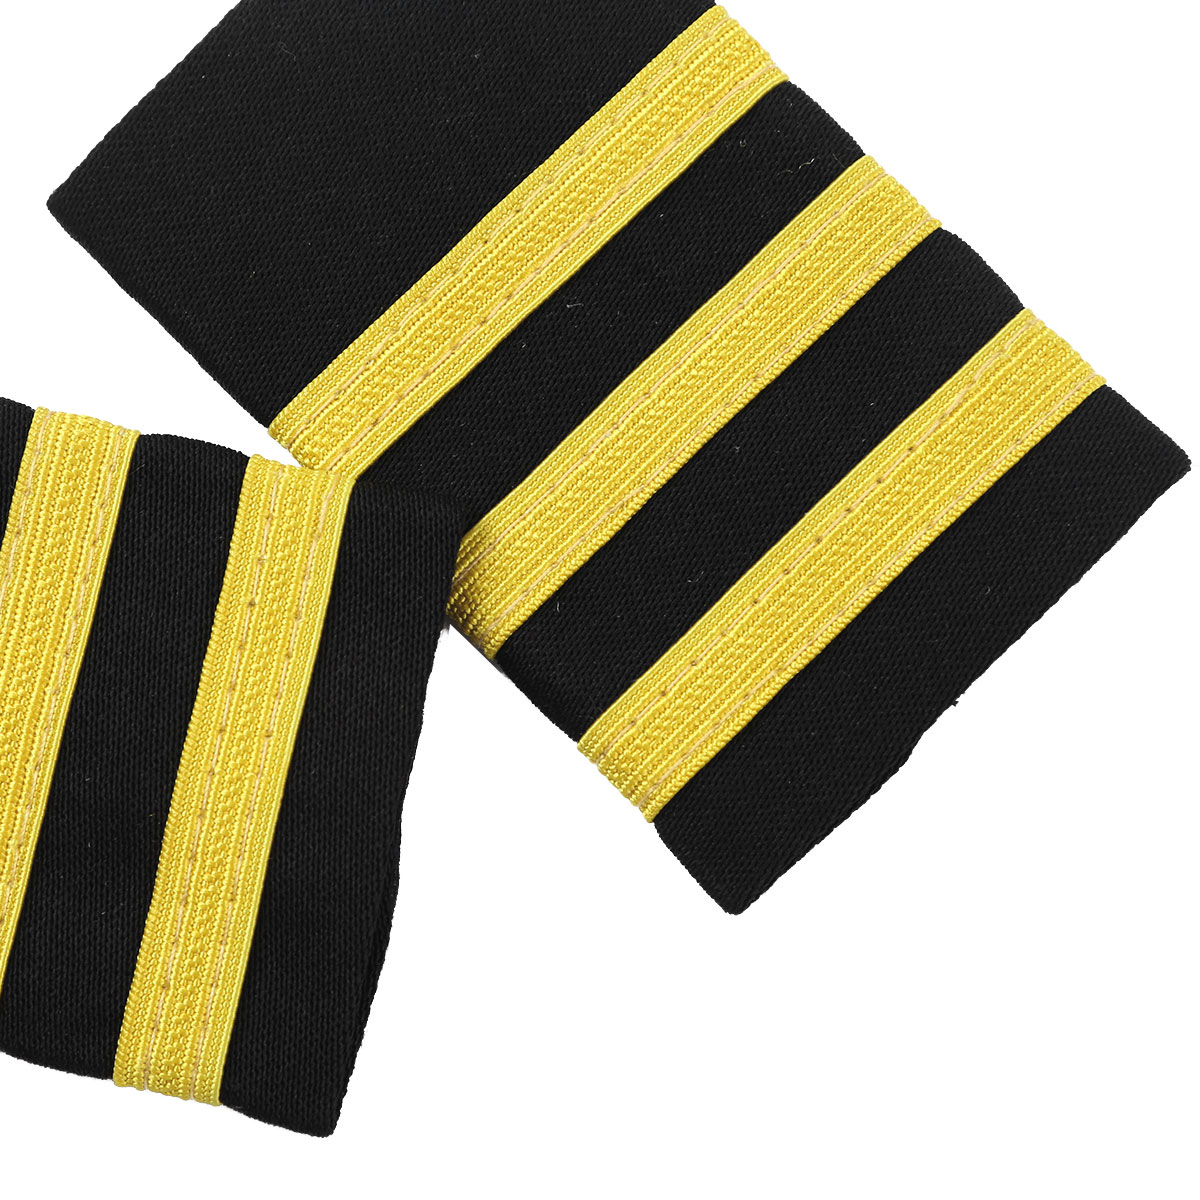 Epaulettes Pilot Shirt Uniform Epaulets with Gold Stripe Shoulder Bad EW